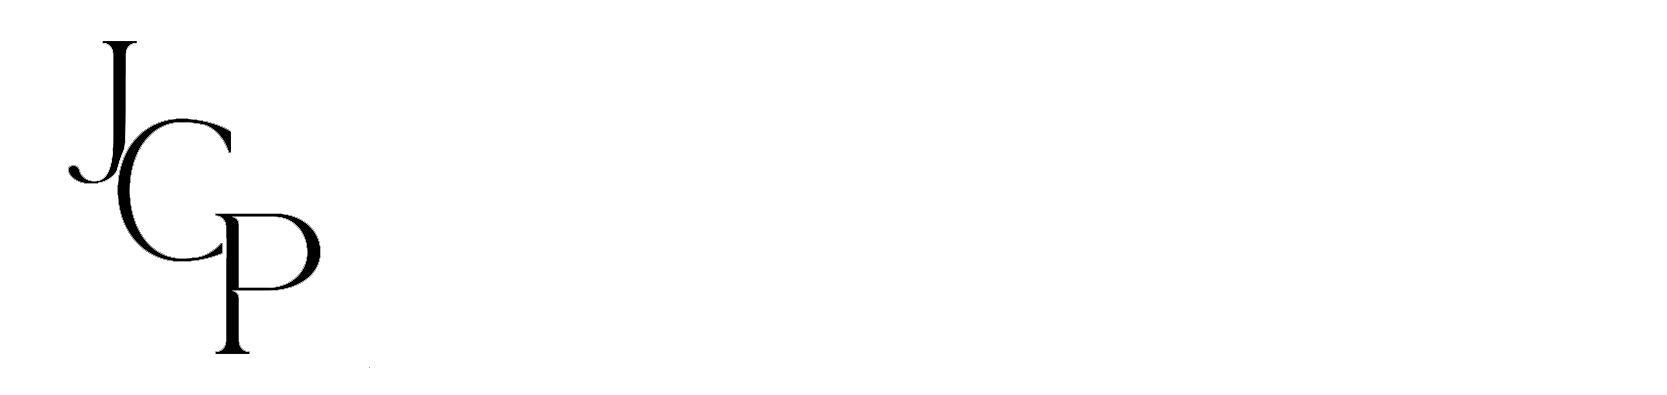 Justin C. Pugh & Associates